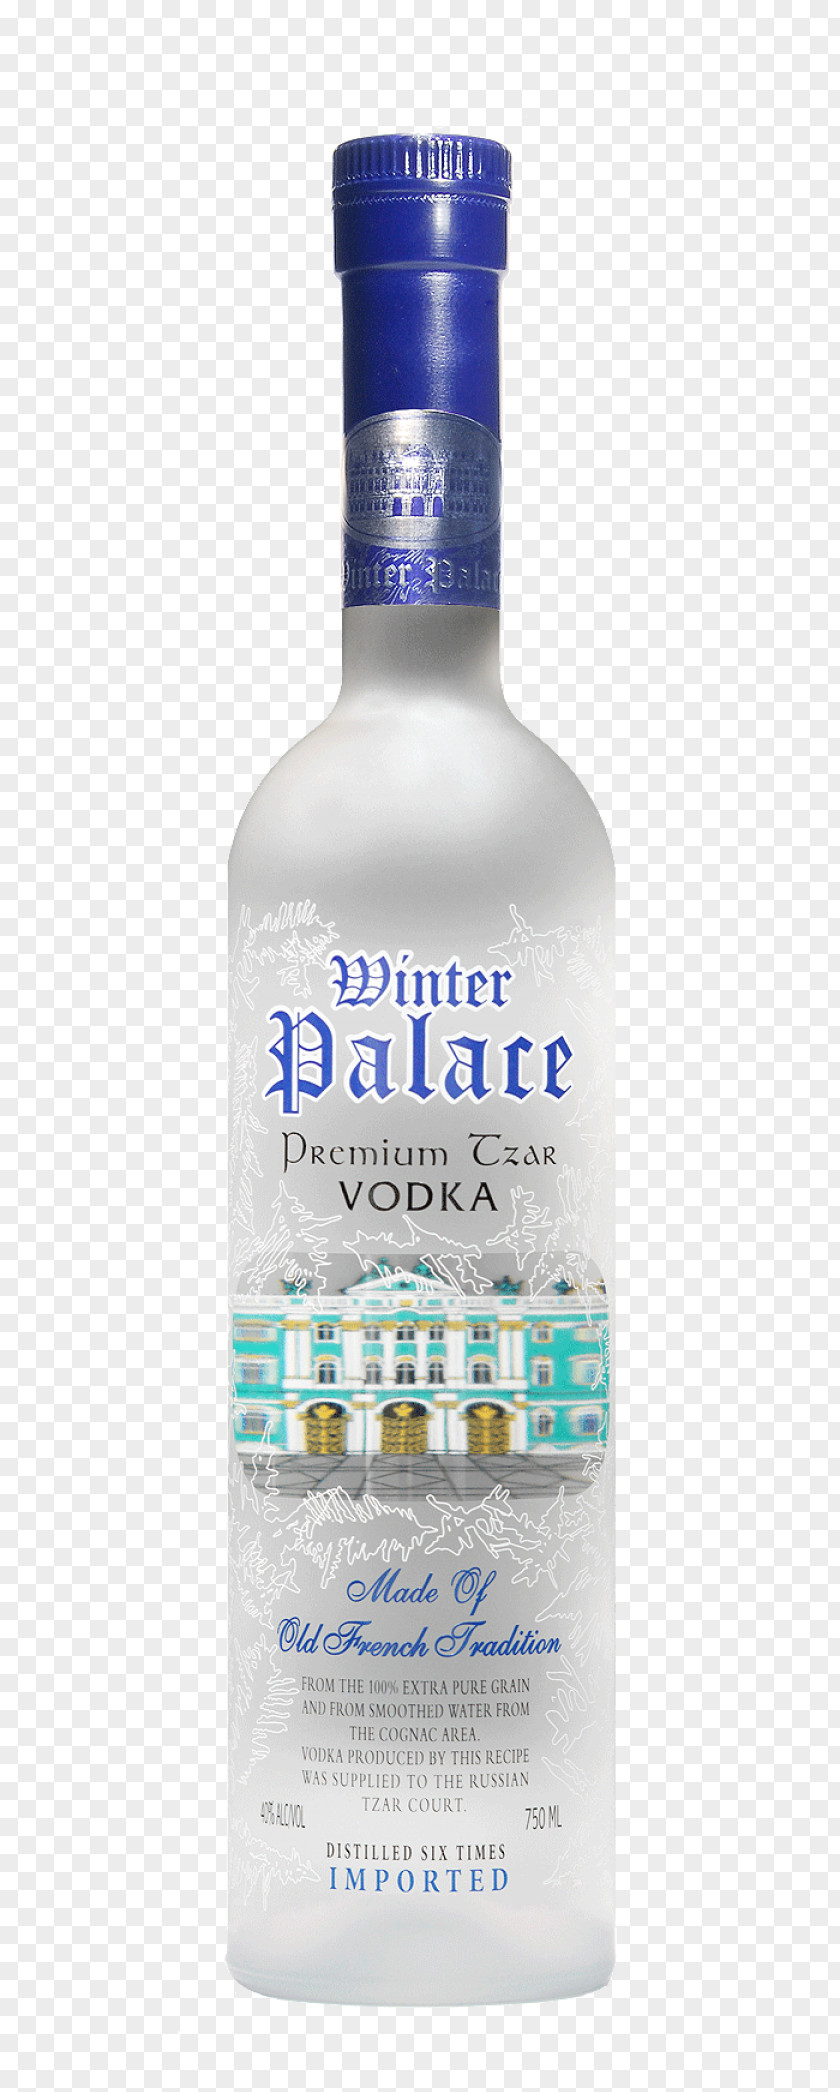 Vodka Packaging Absolut Pyatizvyozdnaya Winter Palace Distilled Beverage PNG